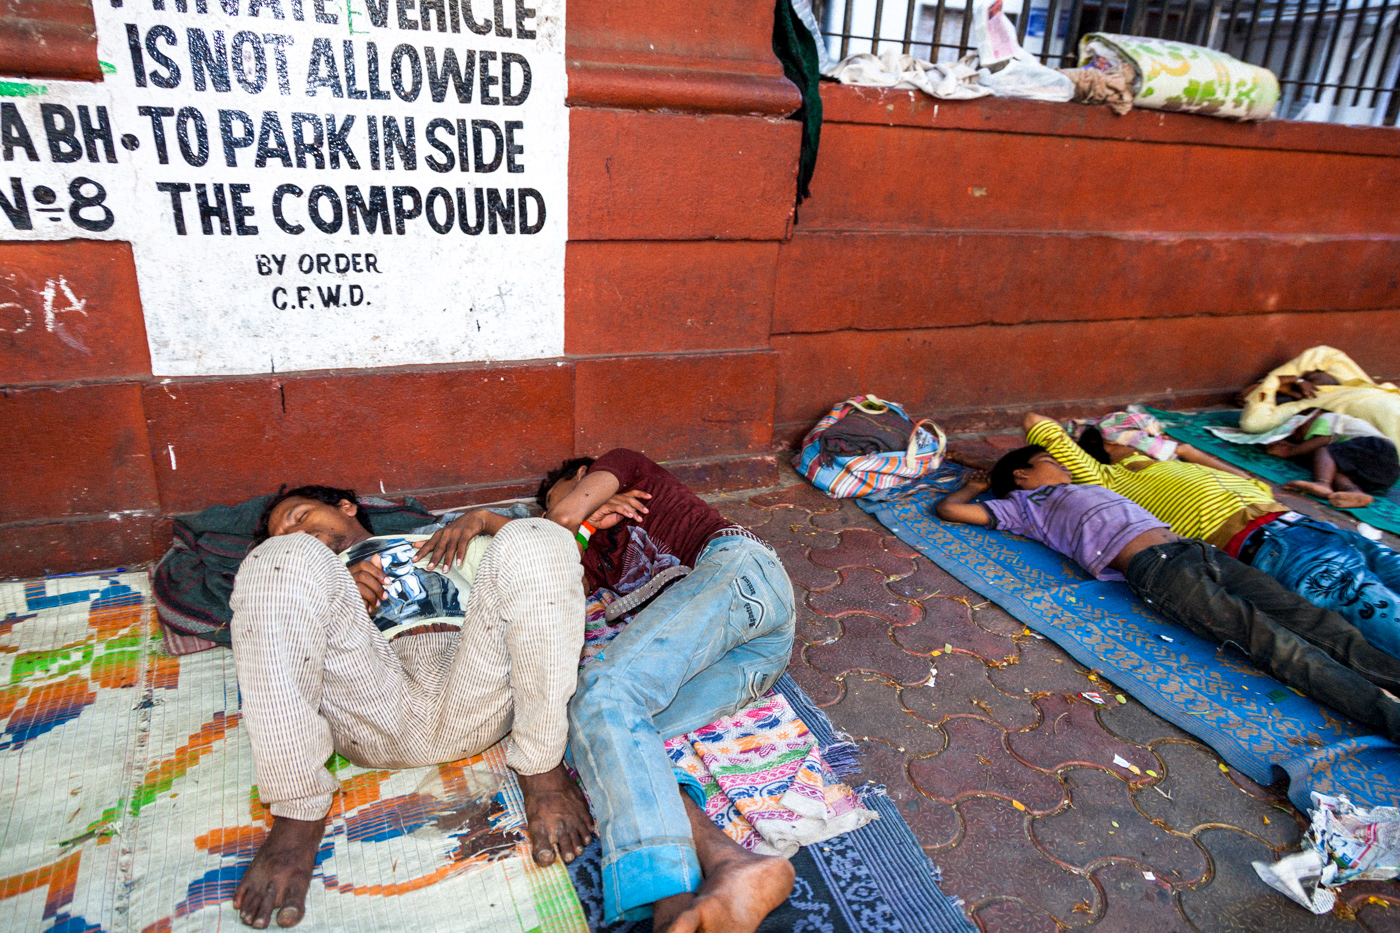 India MUMBAI homeless streets dwellers Poverty dirt fort MORNING sleeping rough beggars poor mahapalika marg